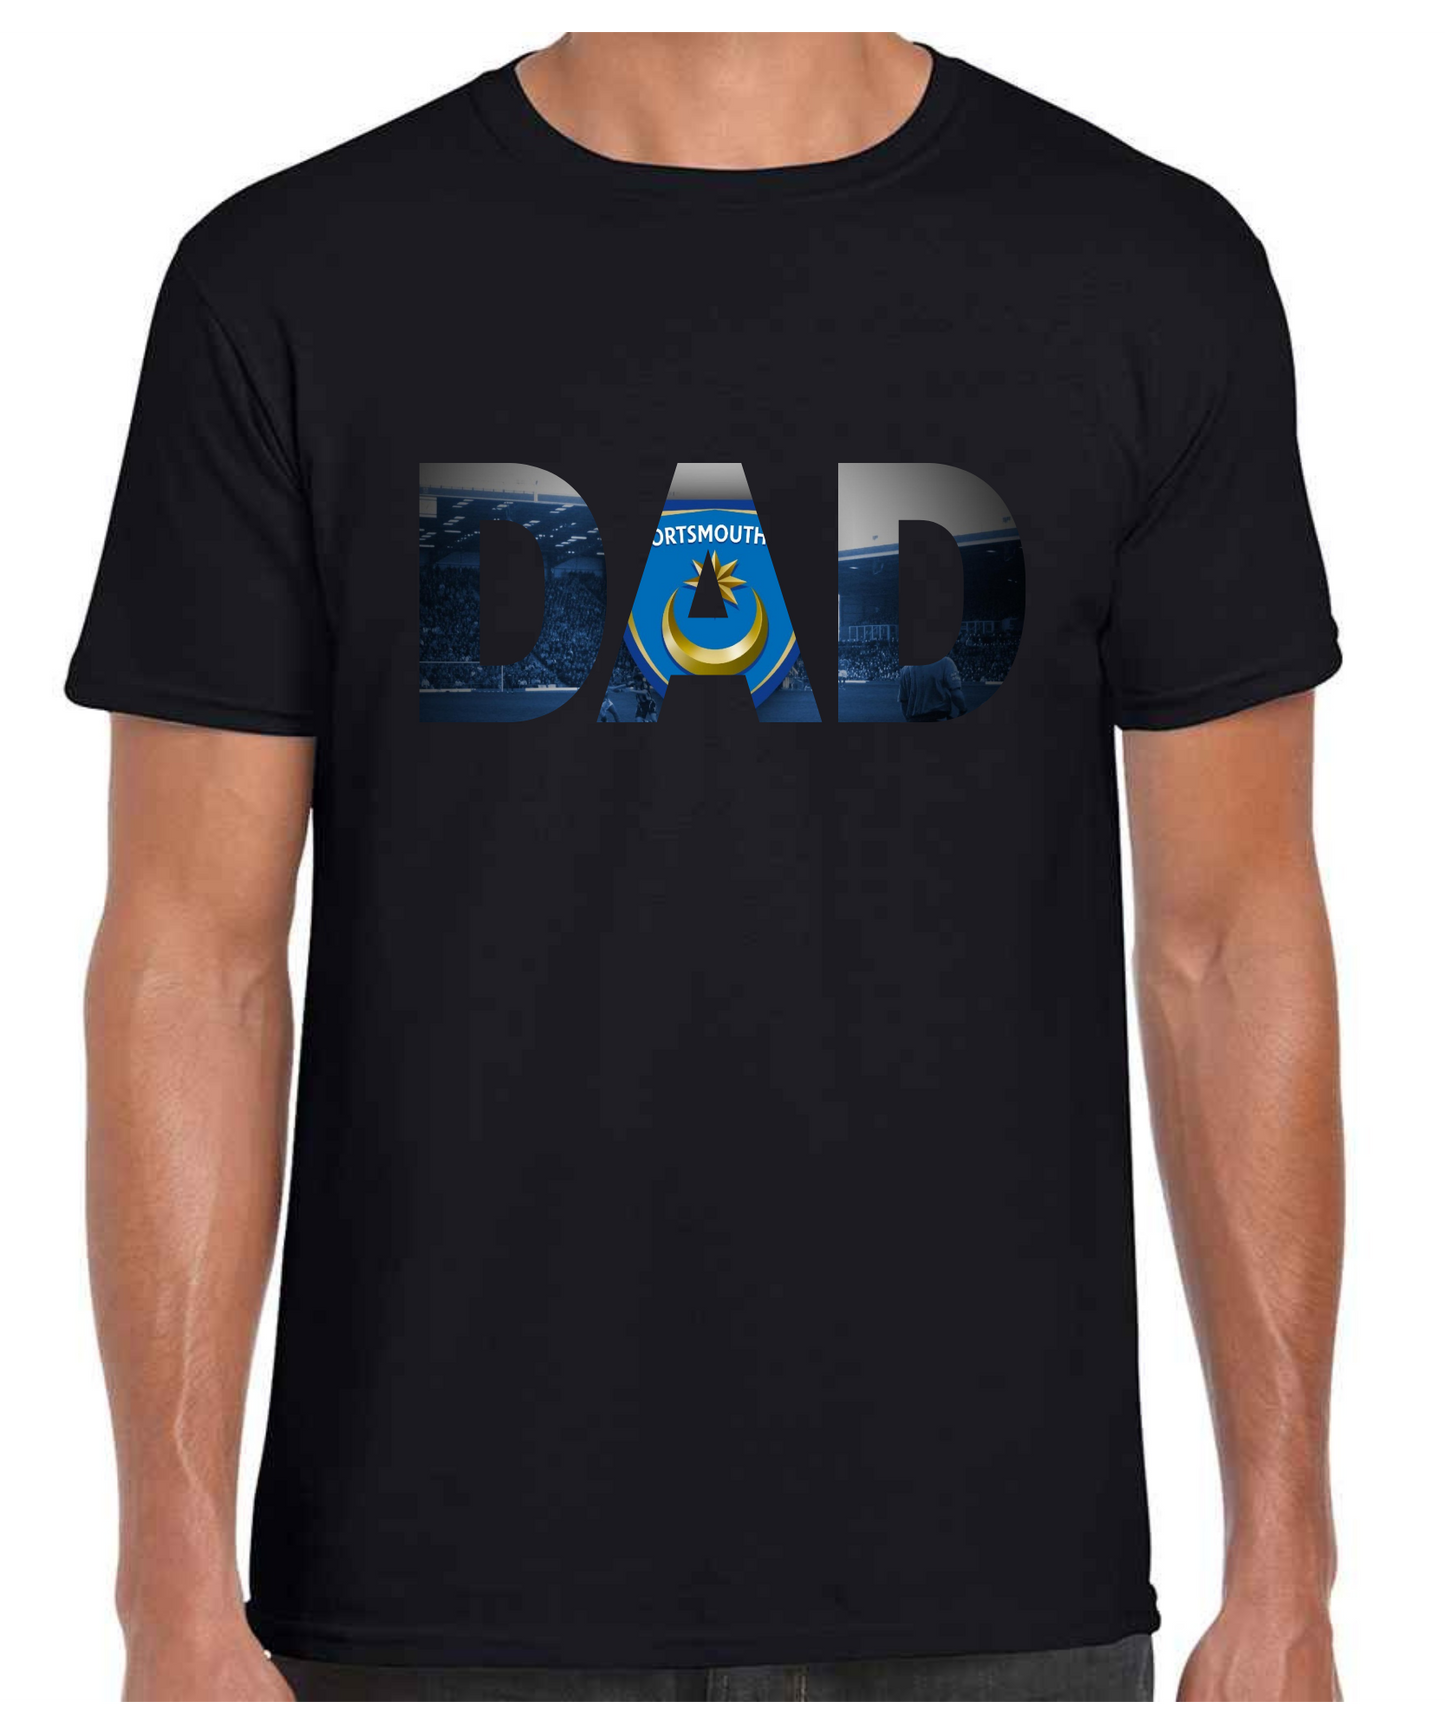 Portsmouth FC - Dad T Shirt (White/Black/Grey)